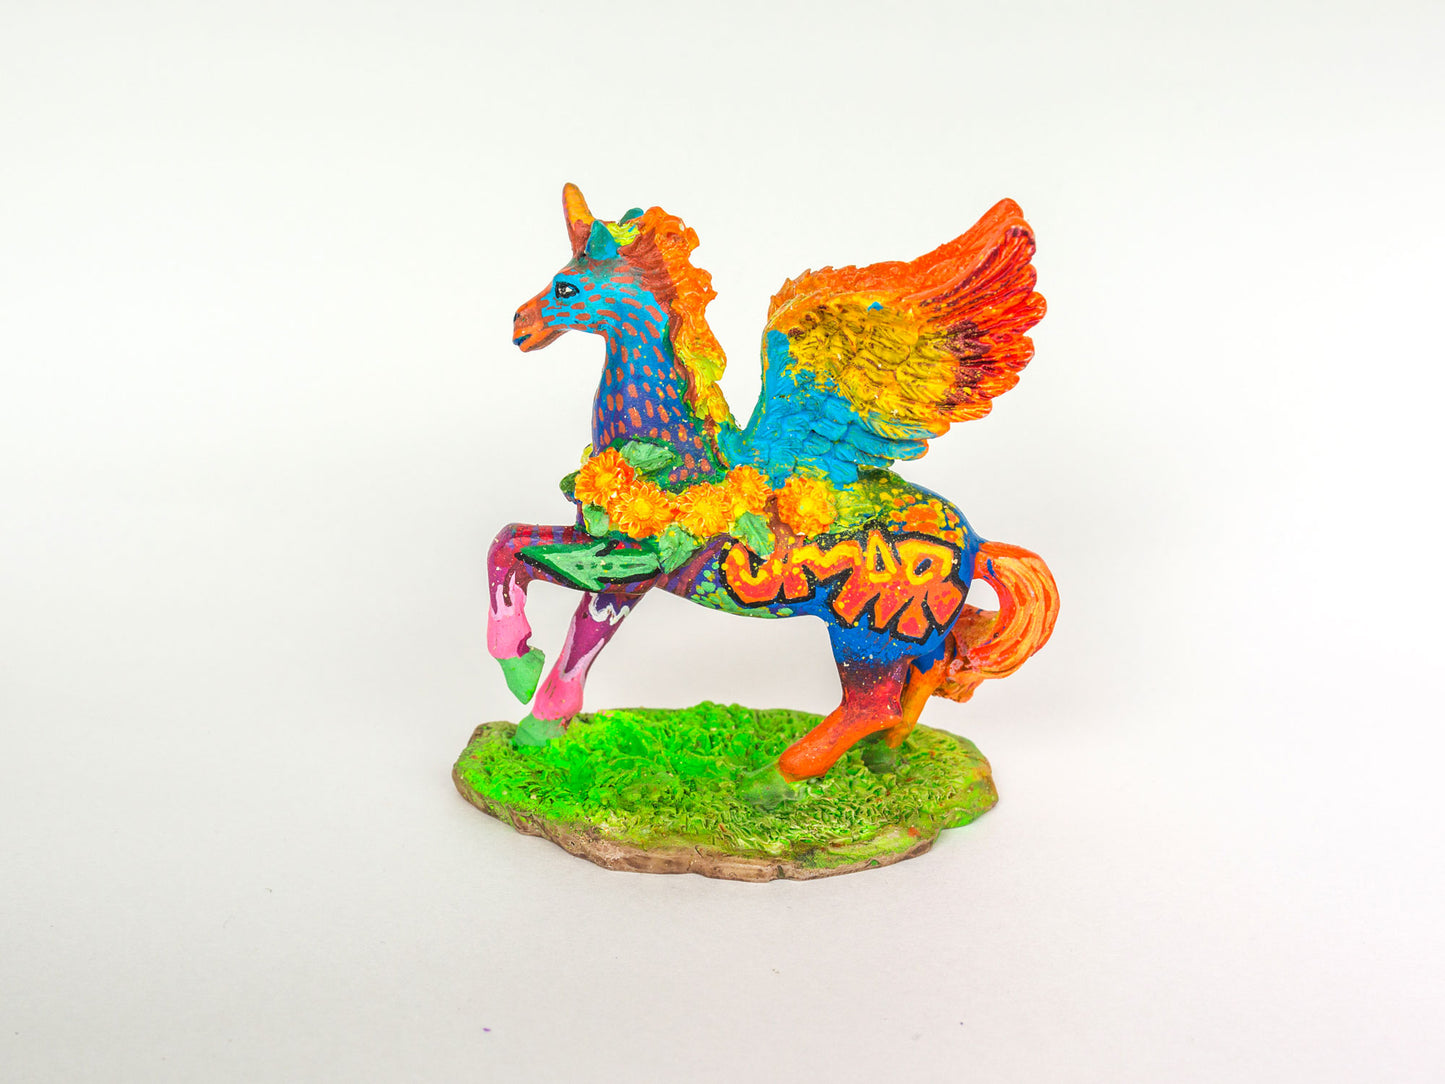 Art Object Toy - "unicorn"